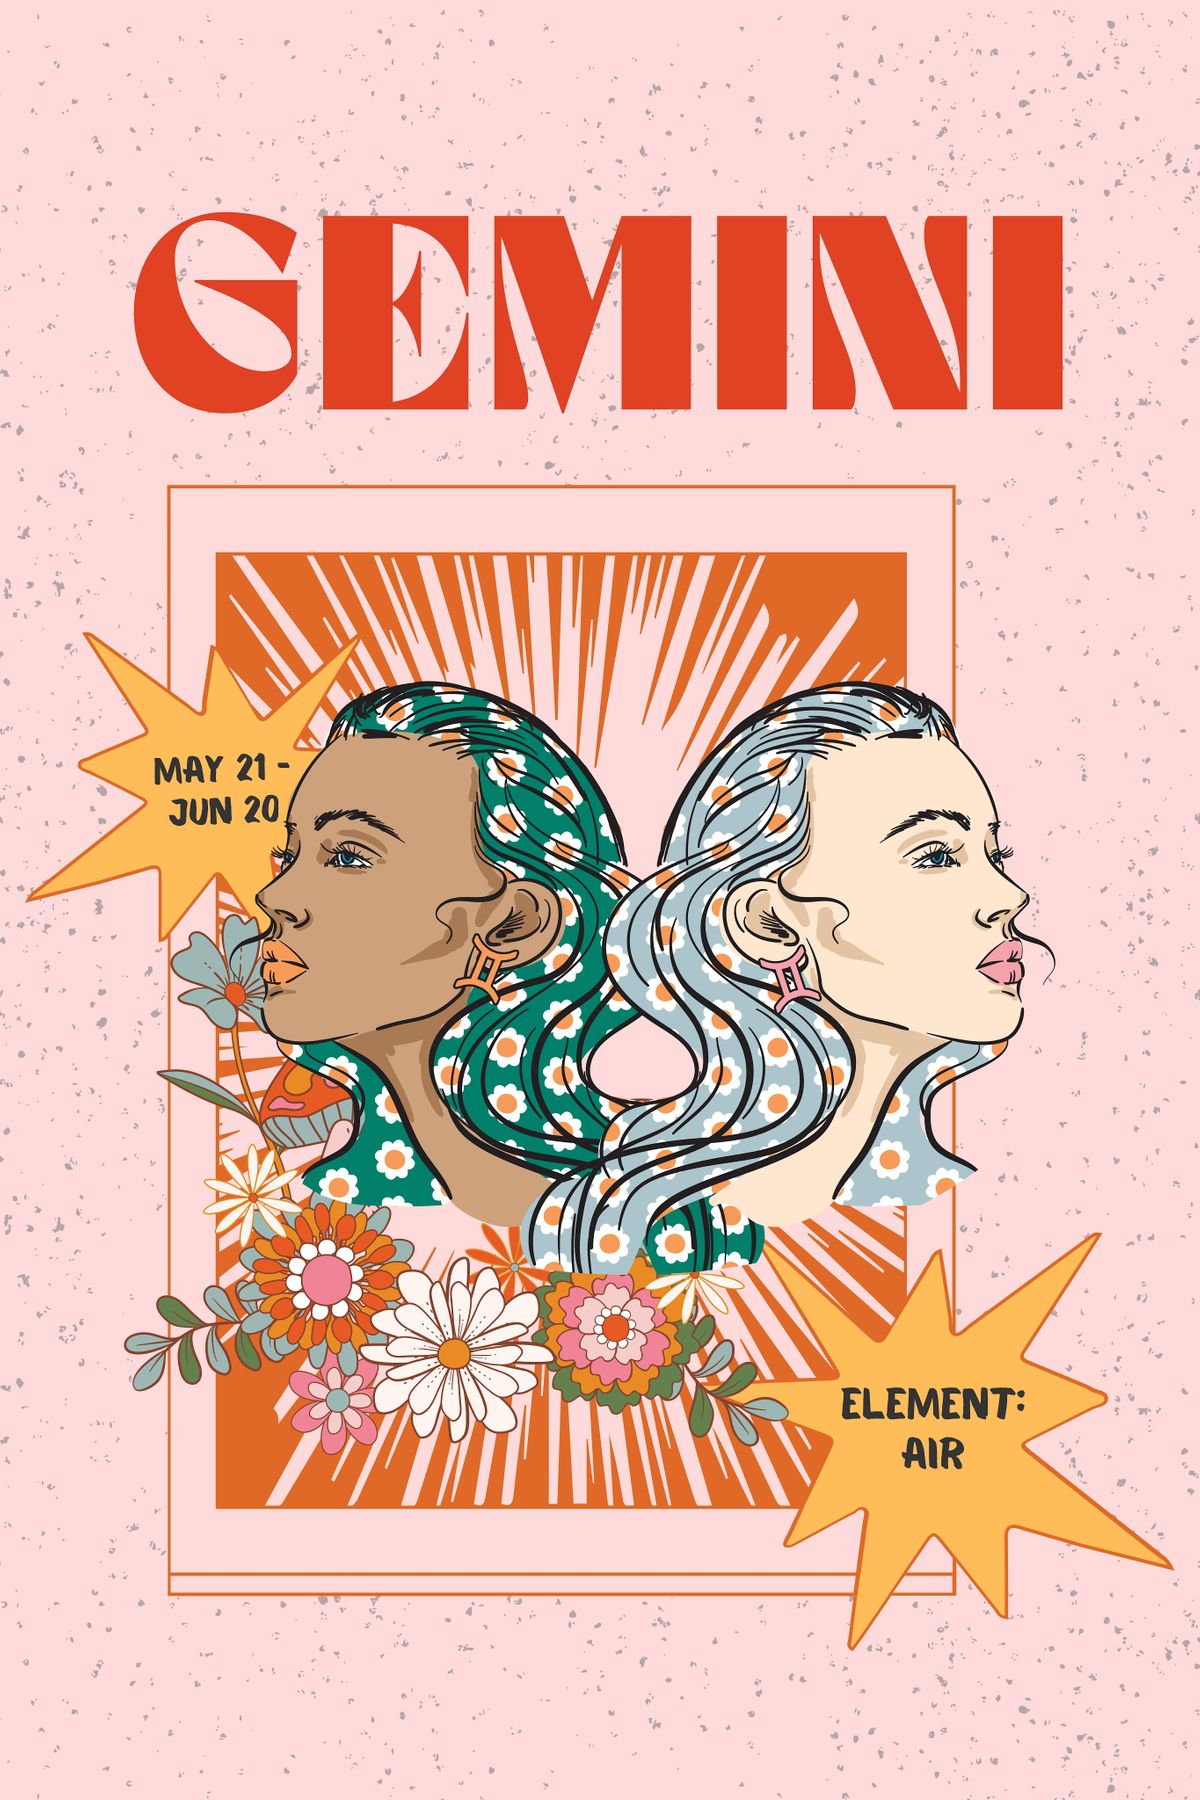 Monthly Astrology Dinner - Gemini